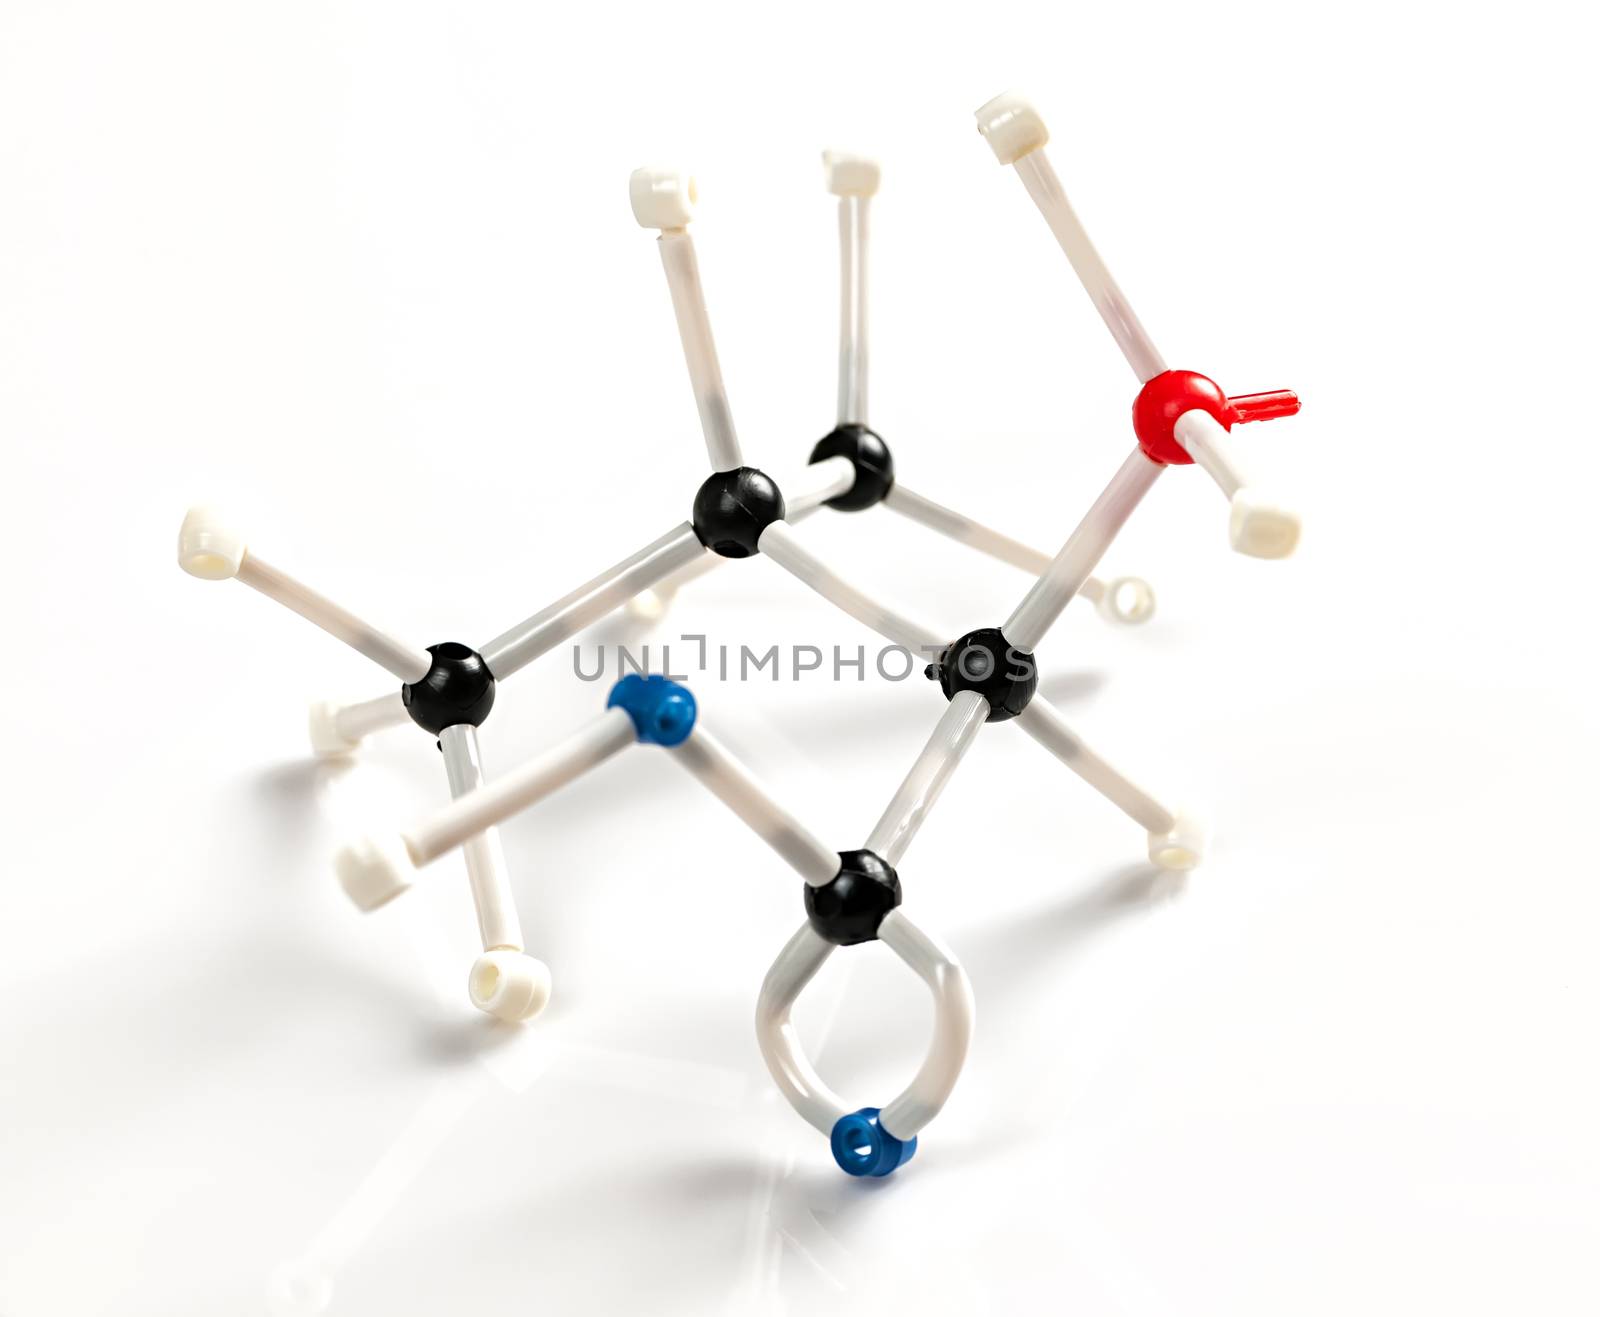 Structure of amino acid valine molecule represented with molecular model building kit